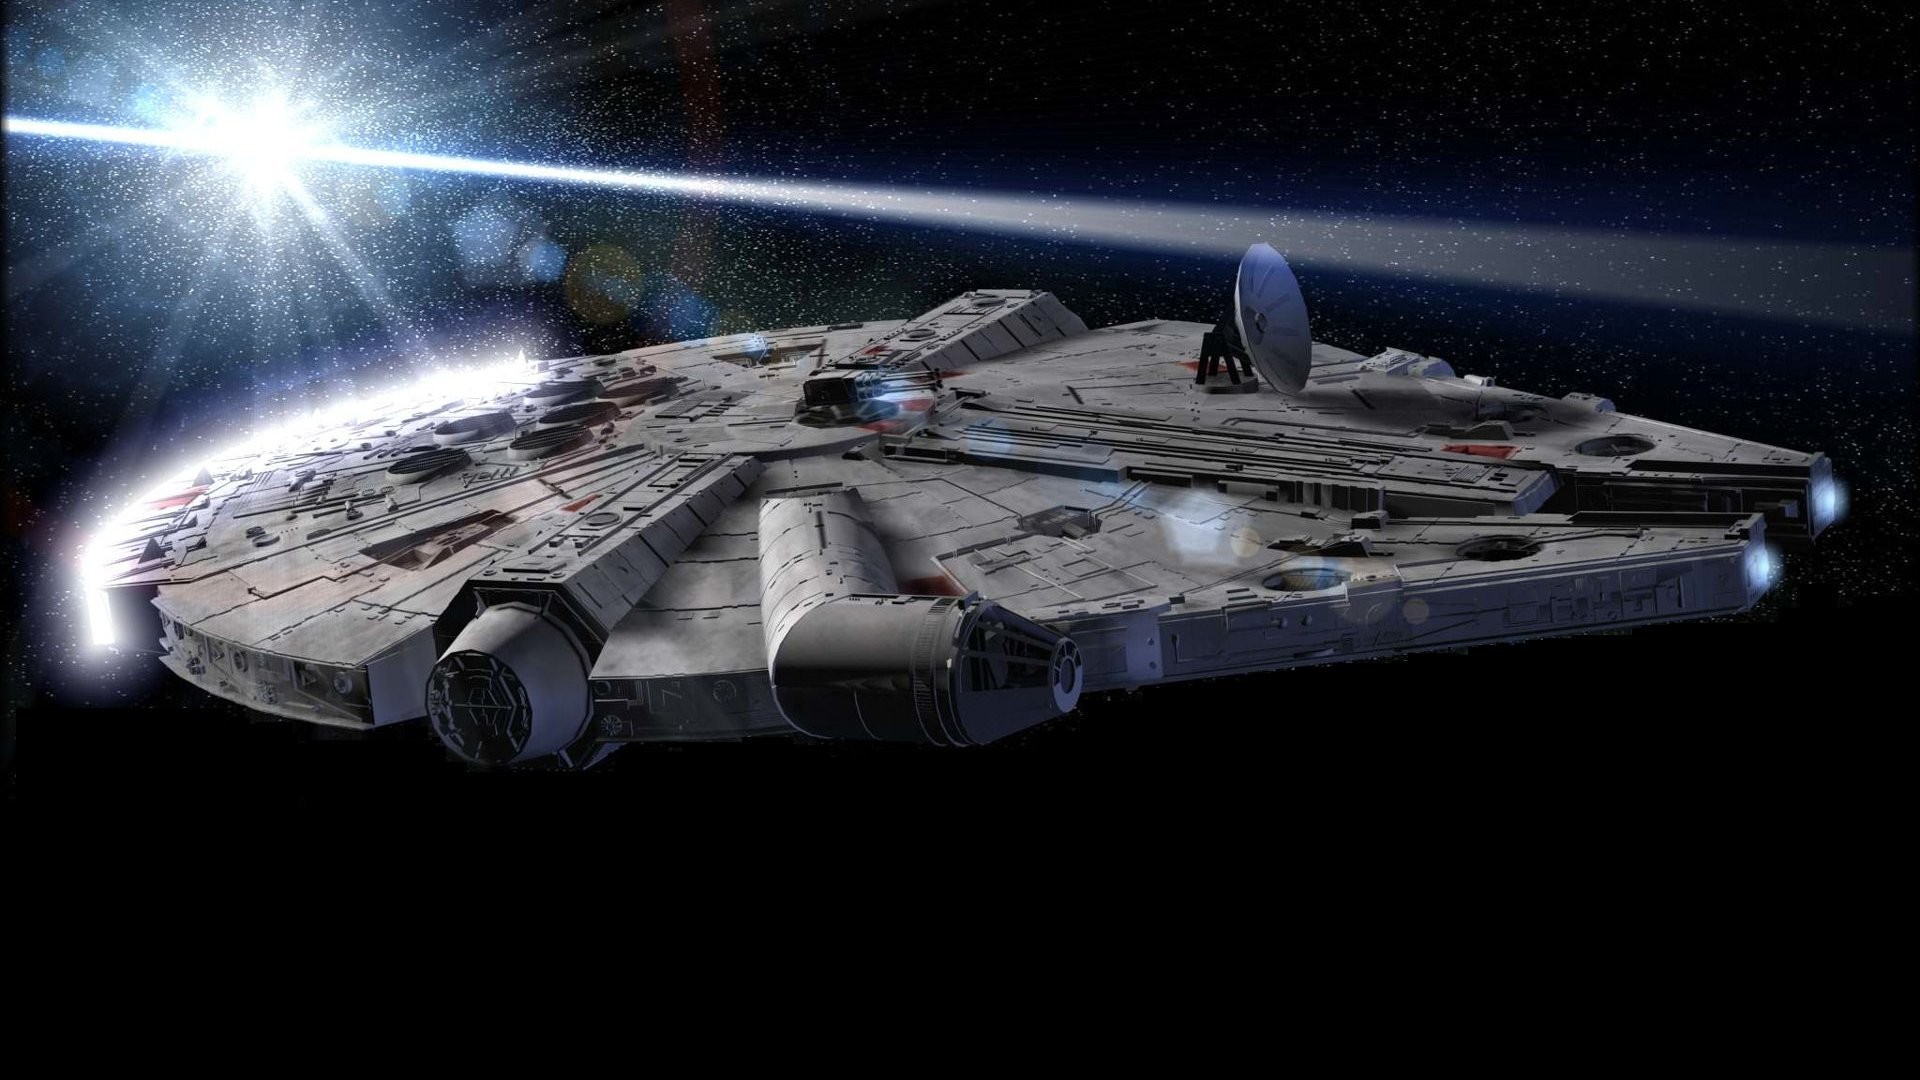 Space Xwingstar Scifi Art Wars Stock Photos Futuristic